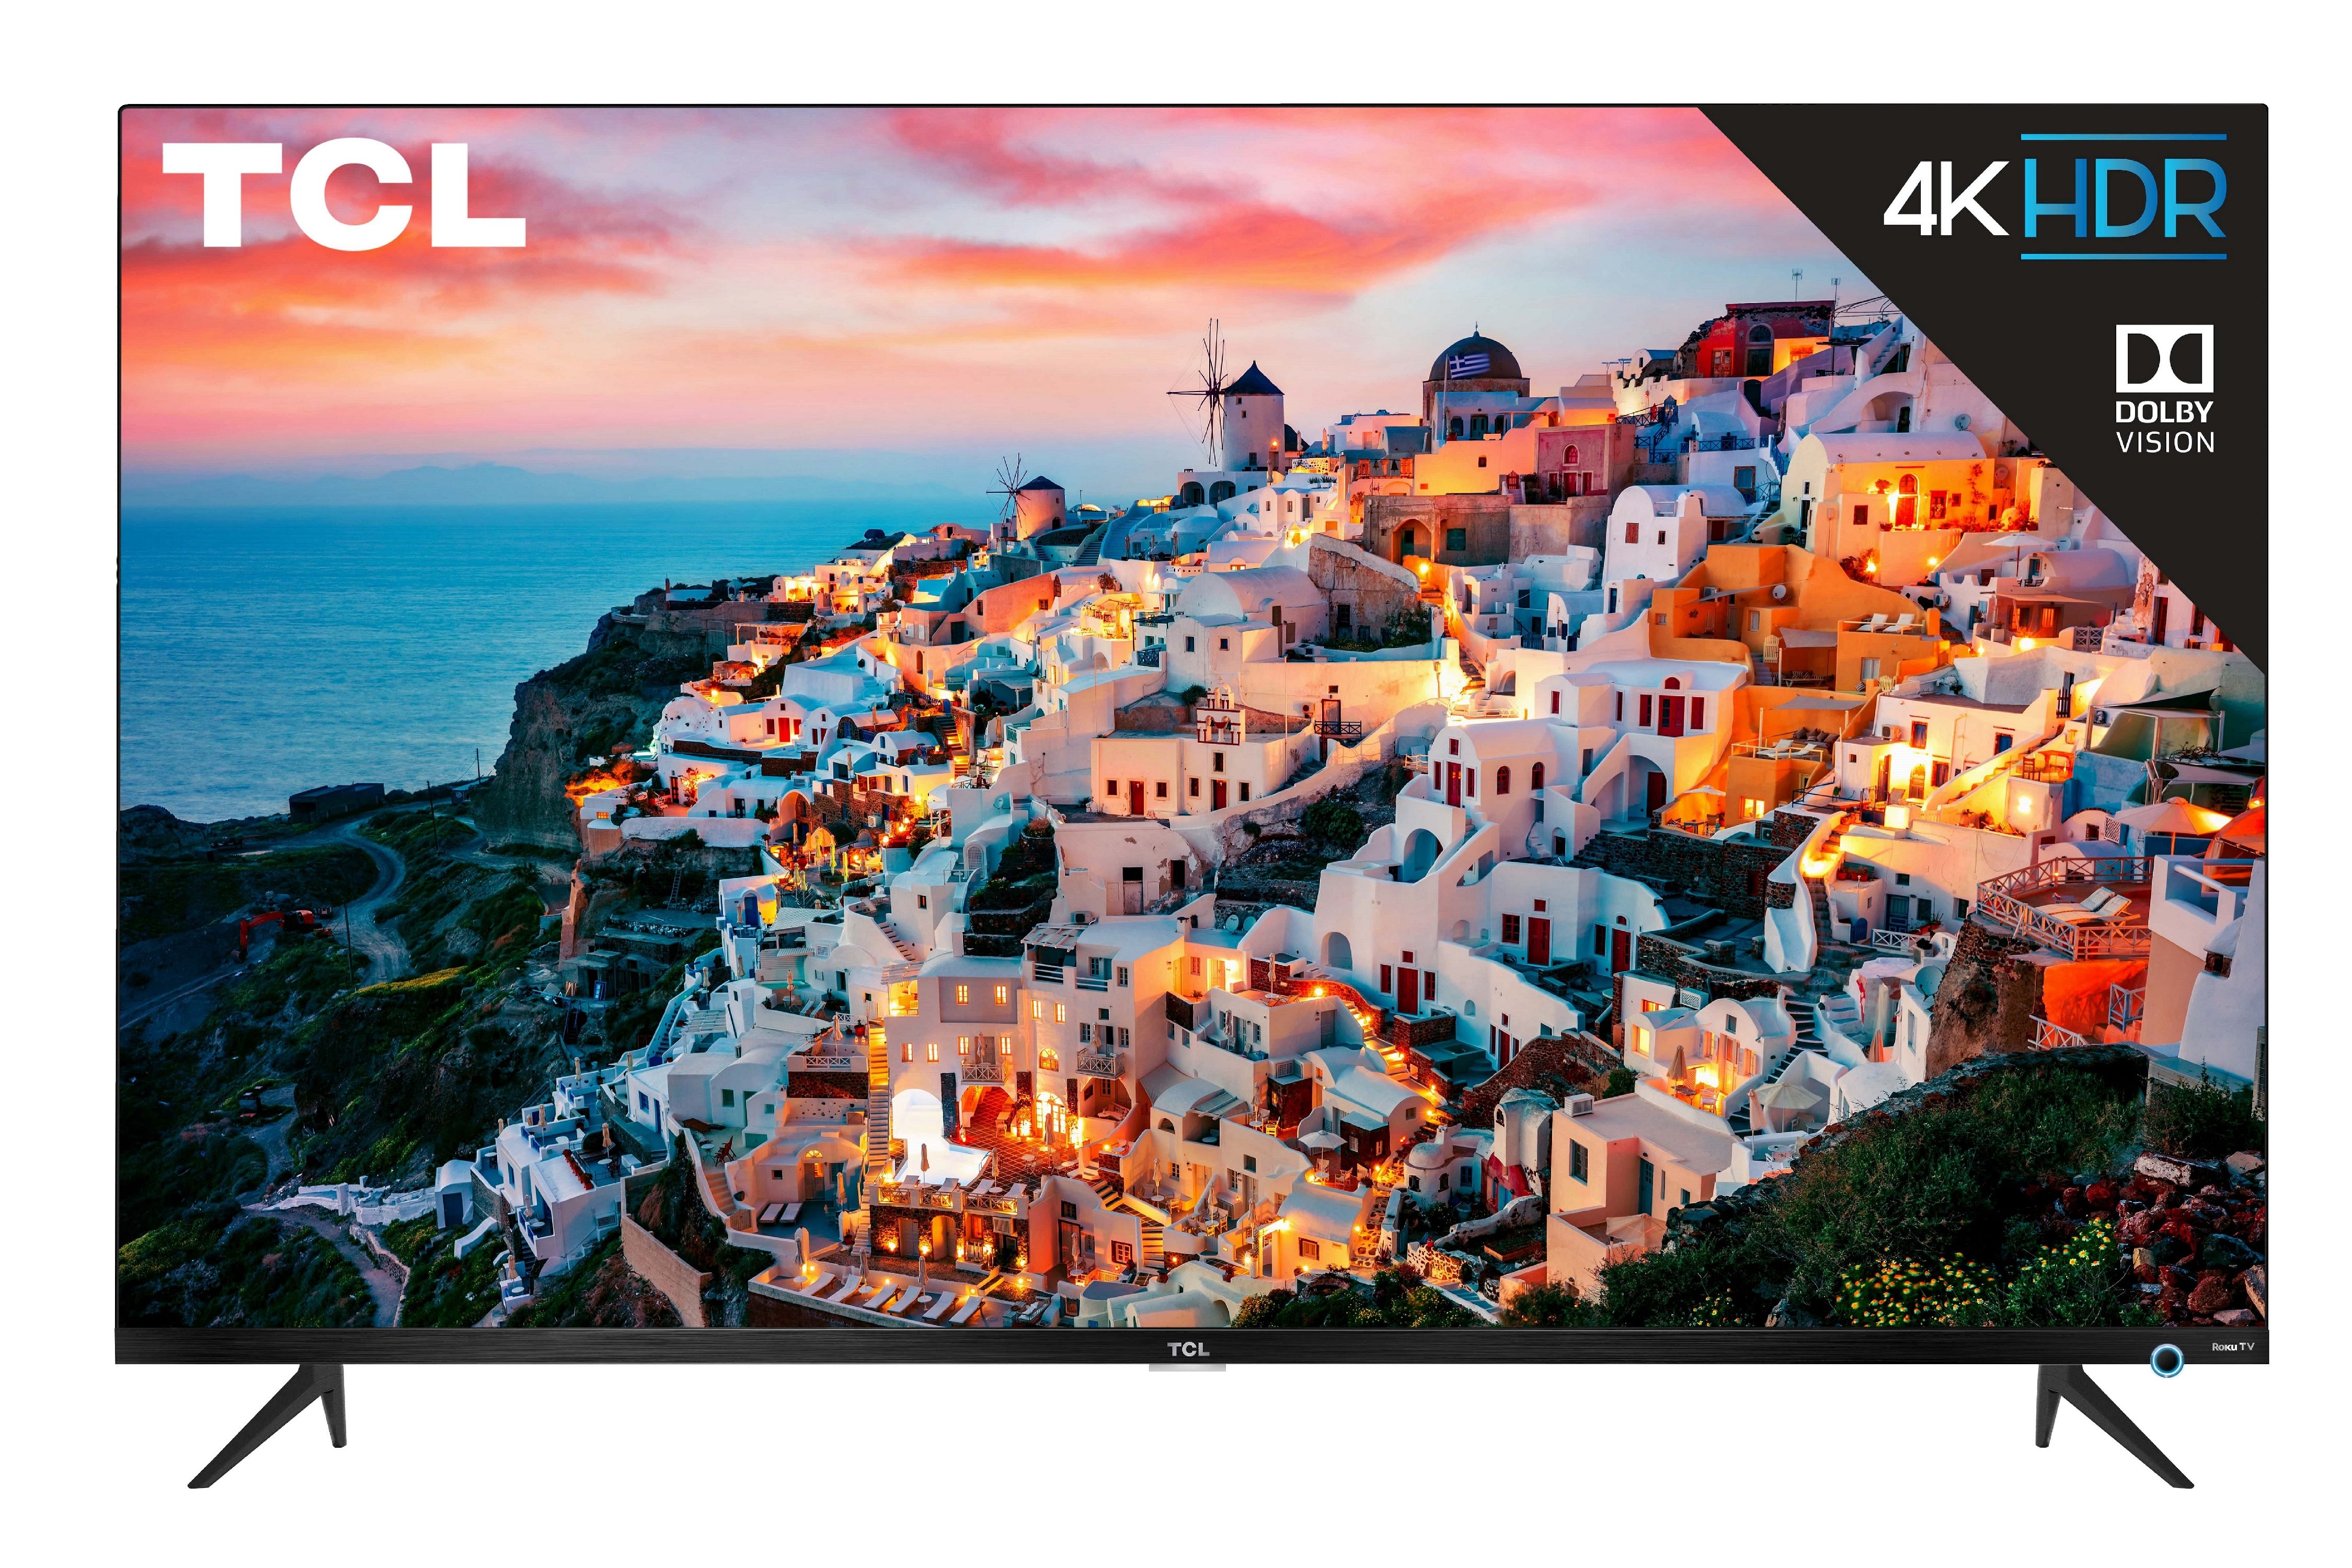 TCL 43" Class 4K UHD LED Roku Smart TV HDR 5 Series 43S525 - image 1 of 12